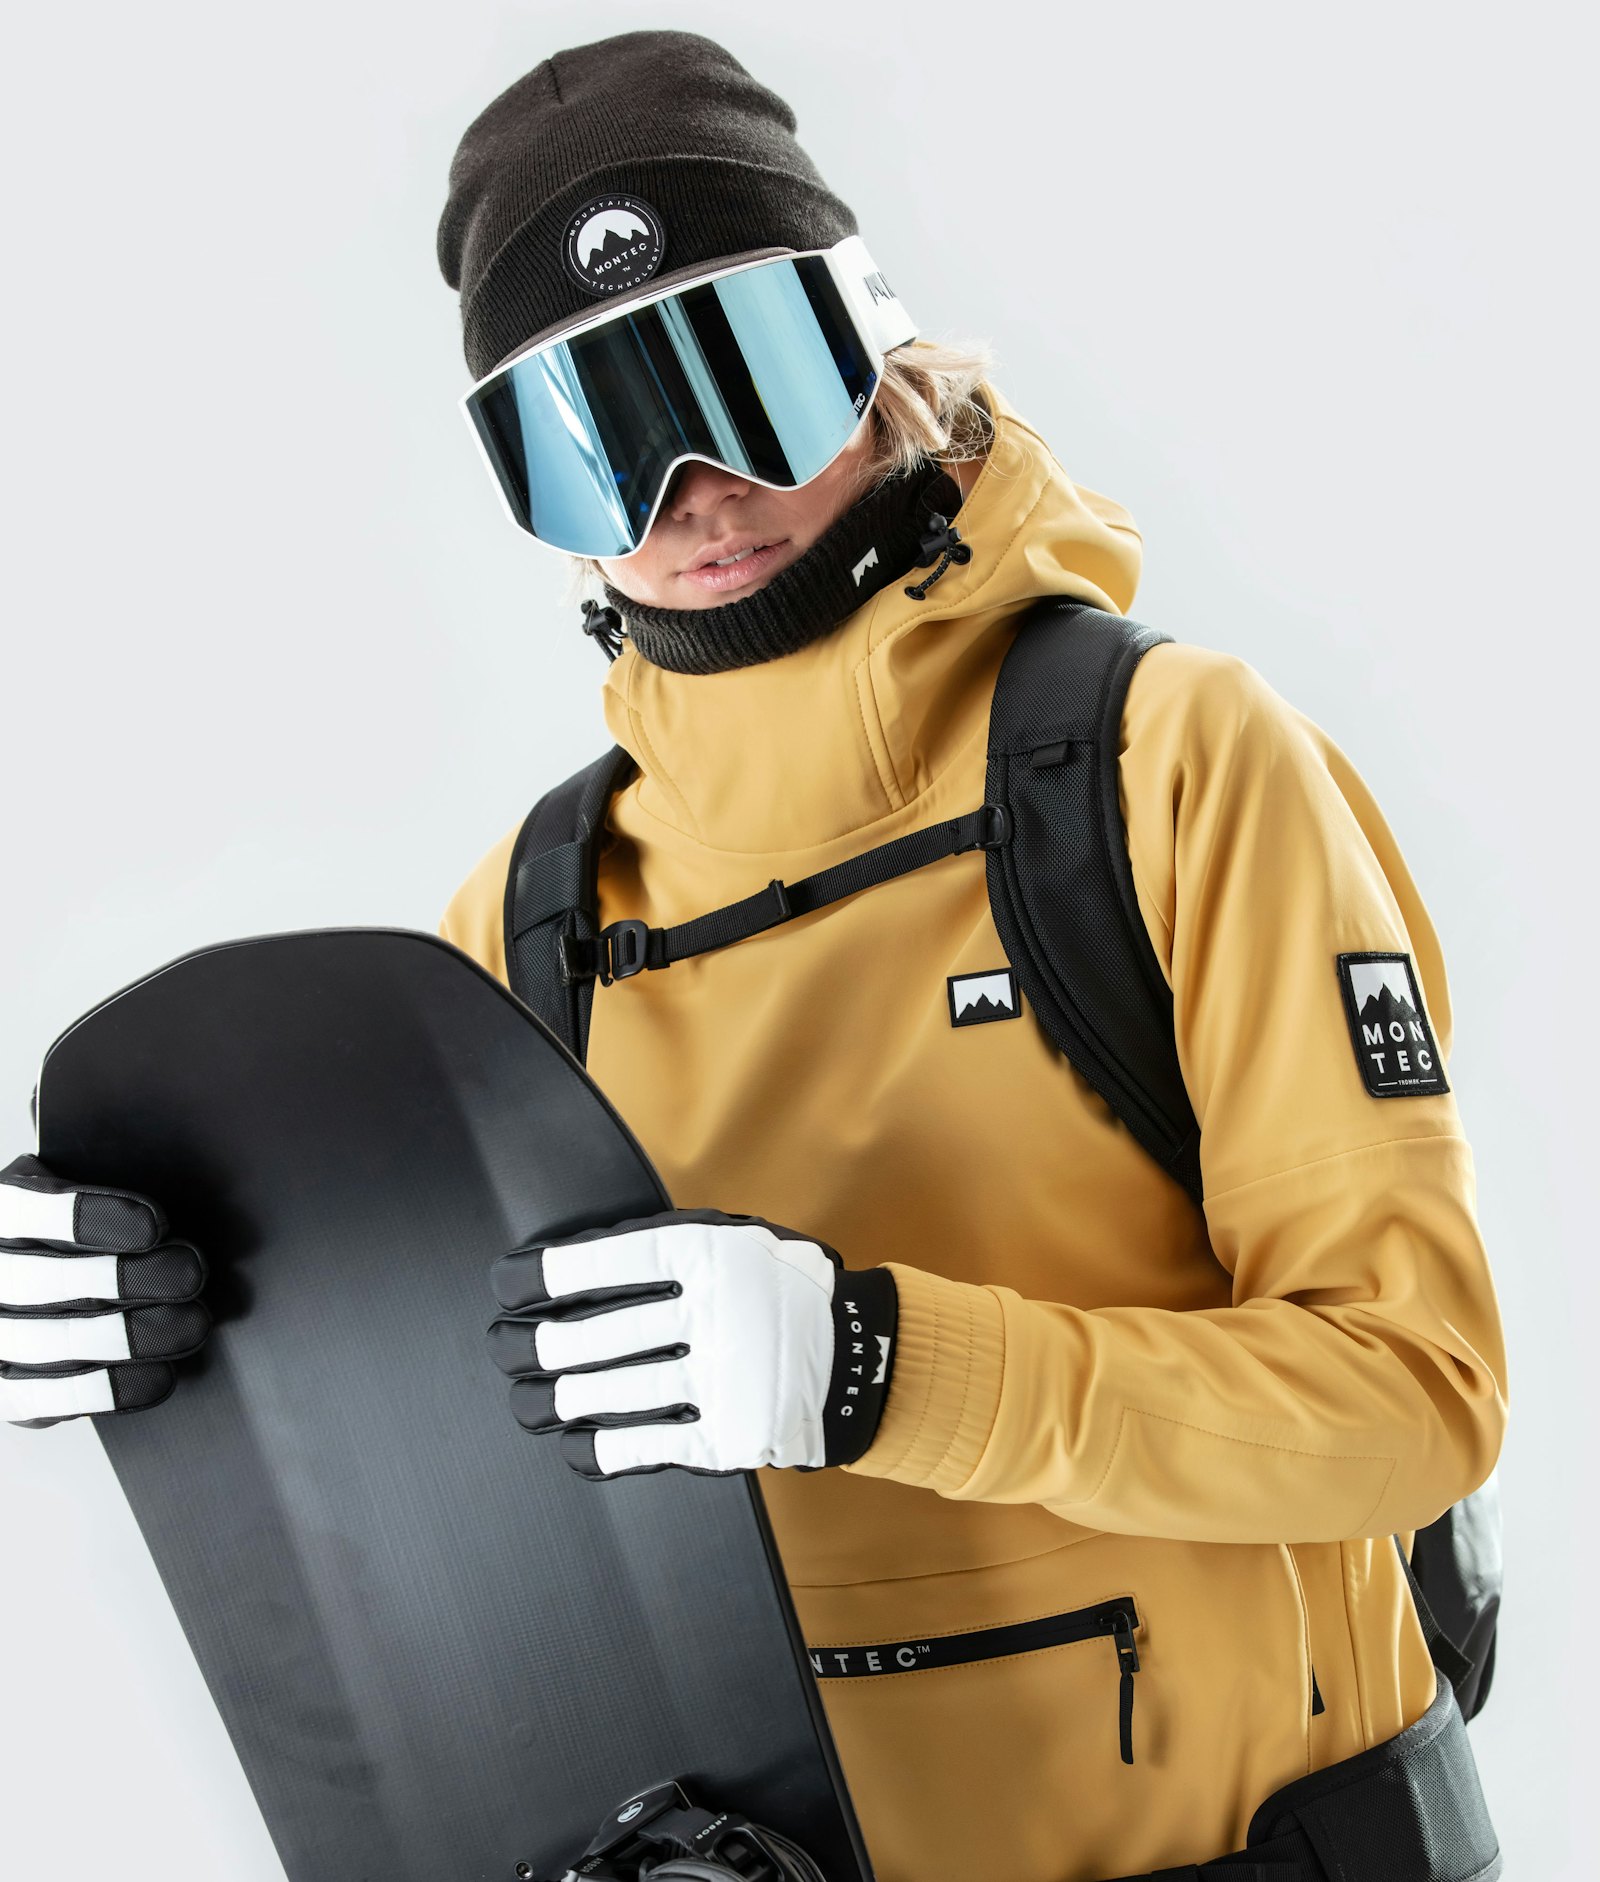 Tempest W 2020 Veste Snowboard Femme Yellow Renewed